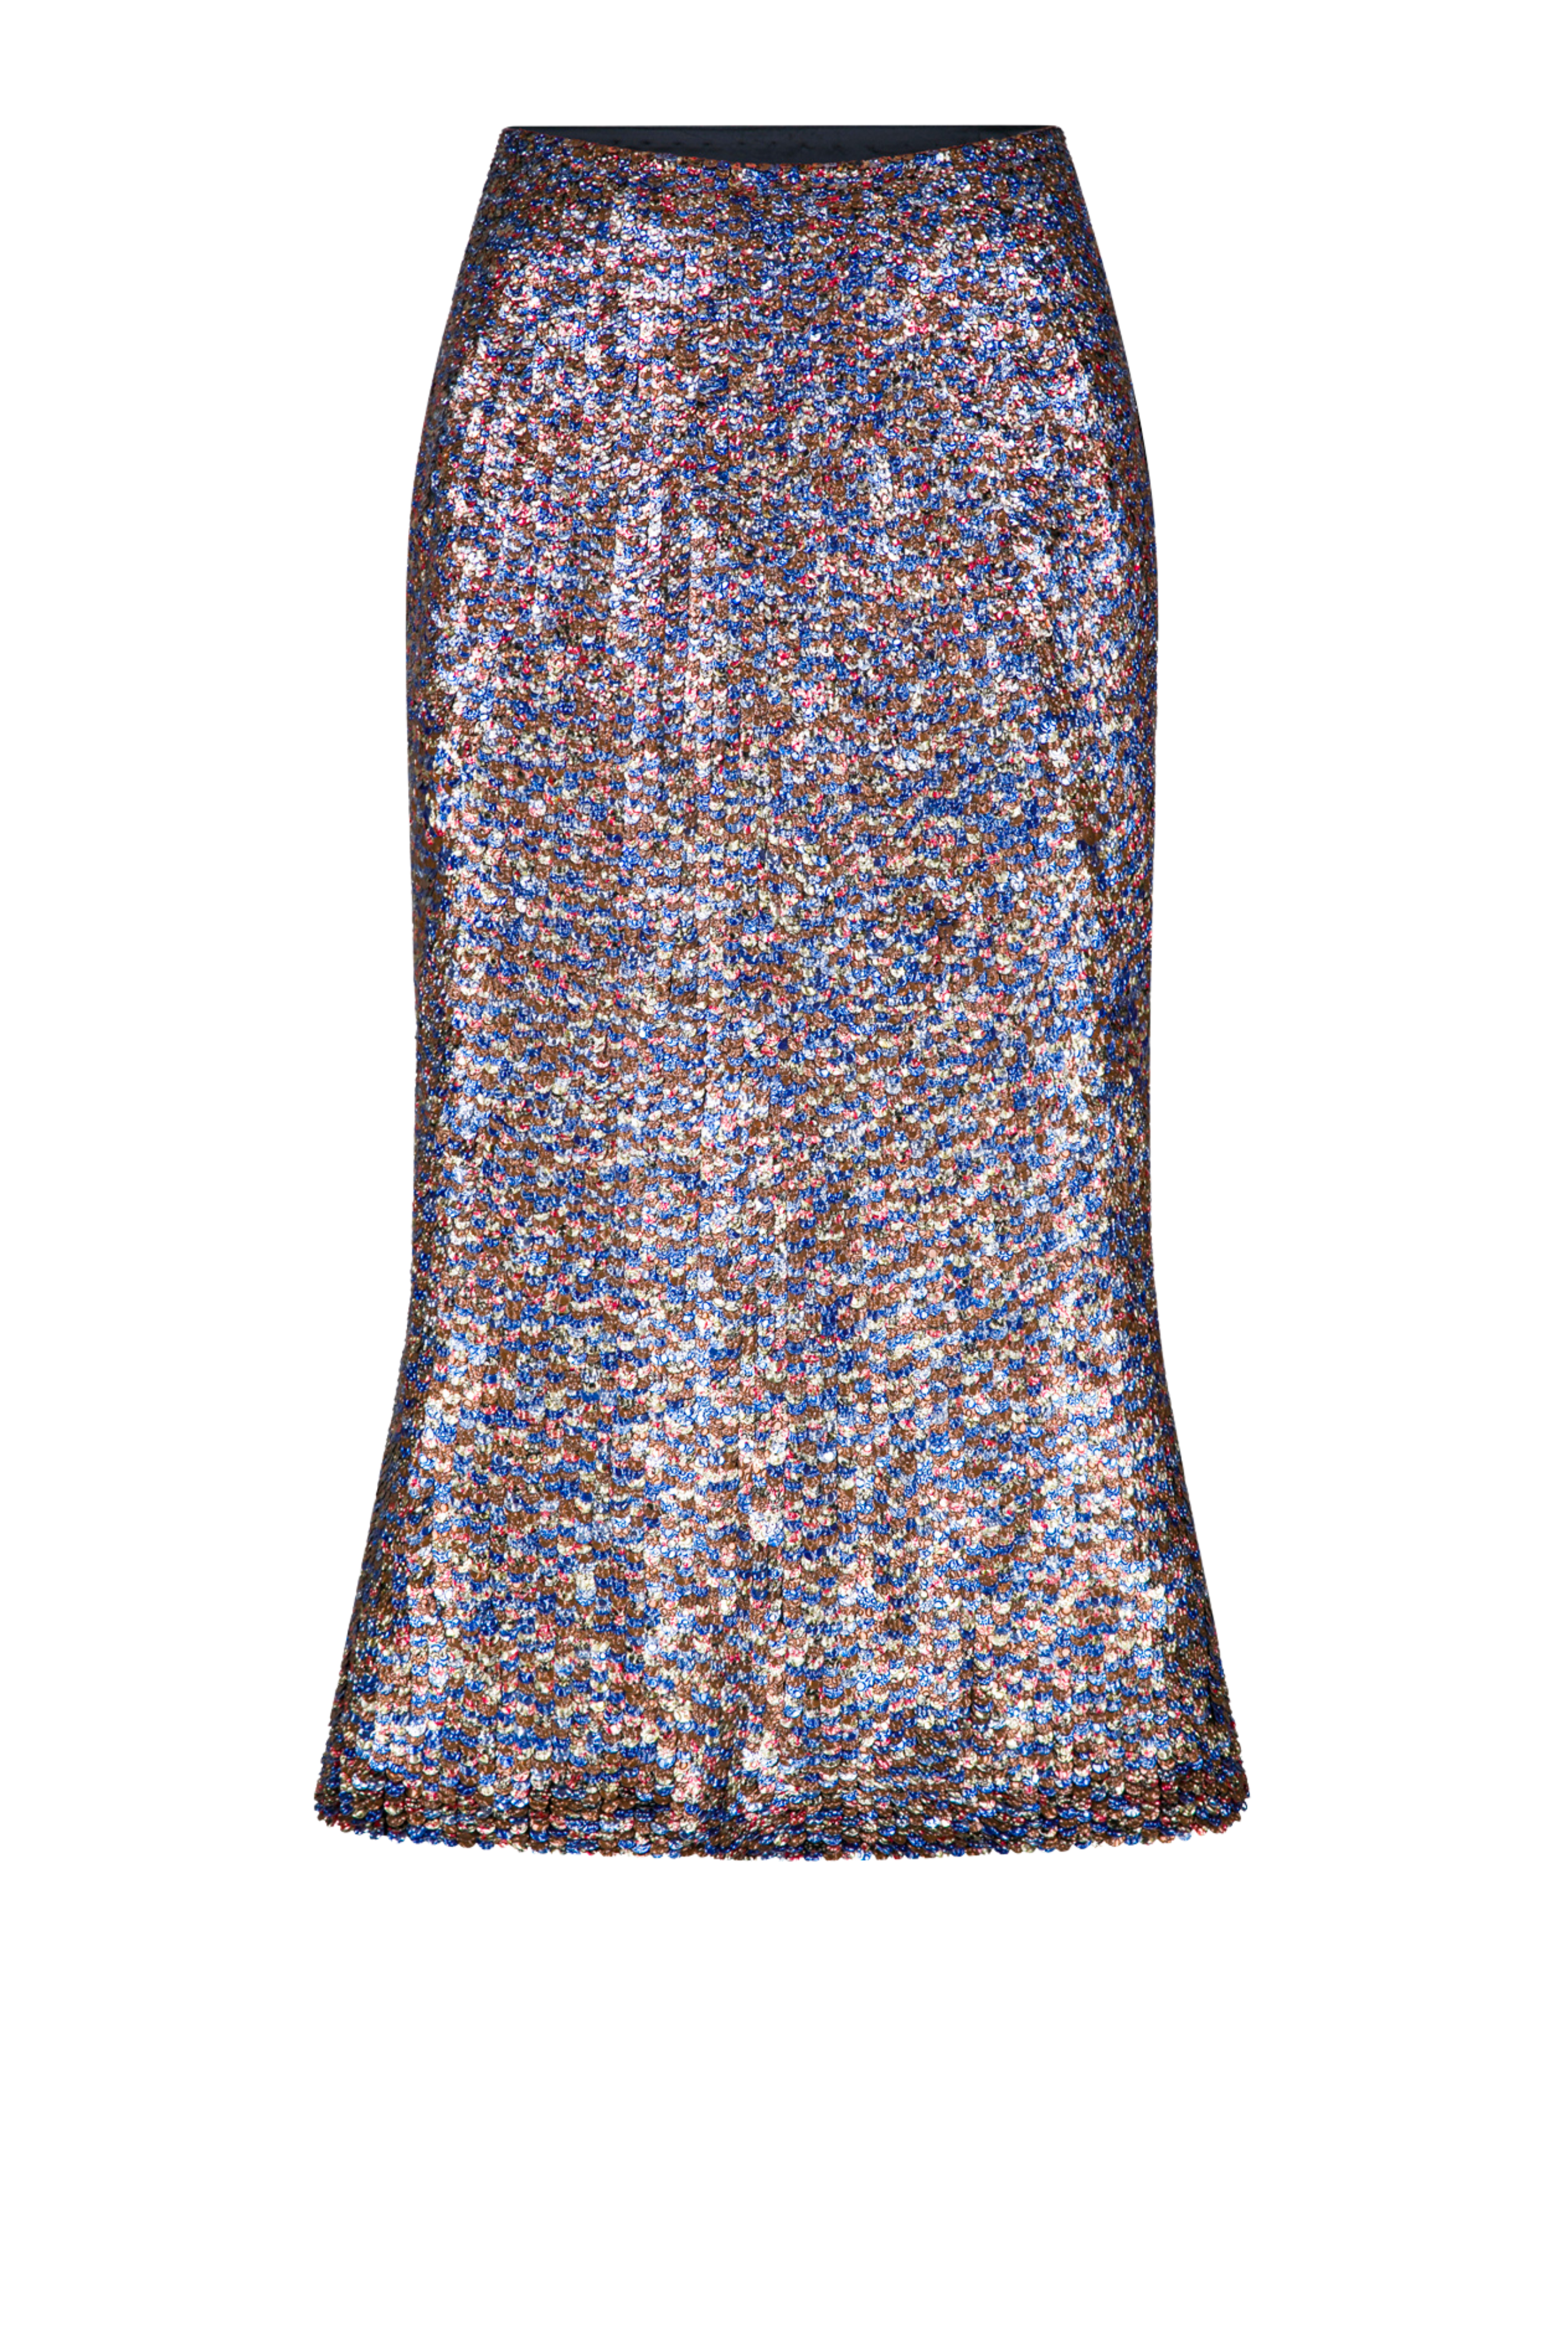 Sybil Embellished Sequin Skirt